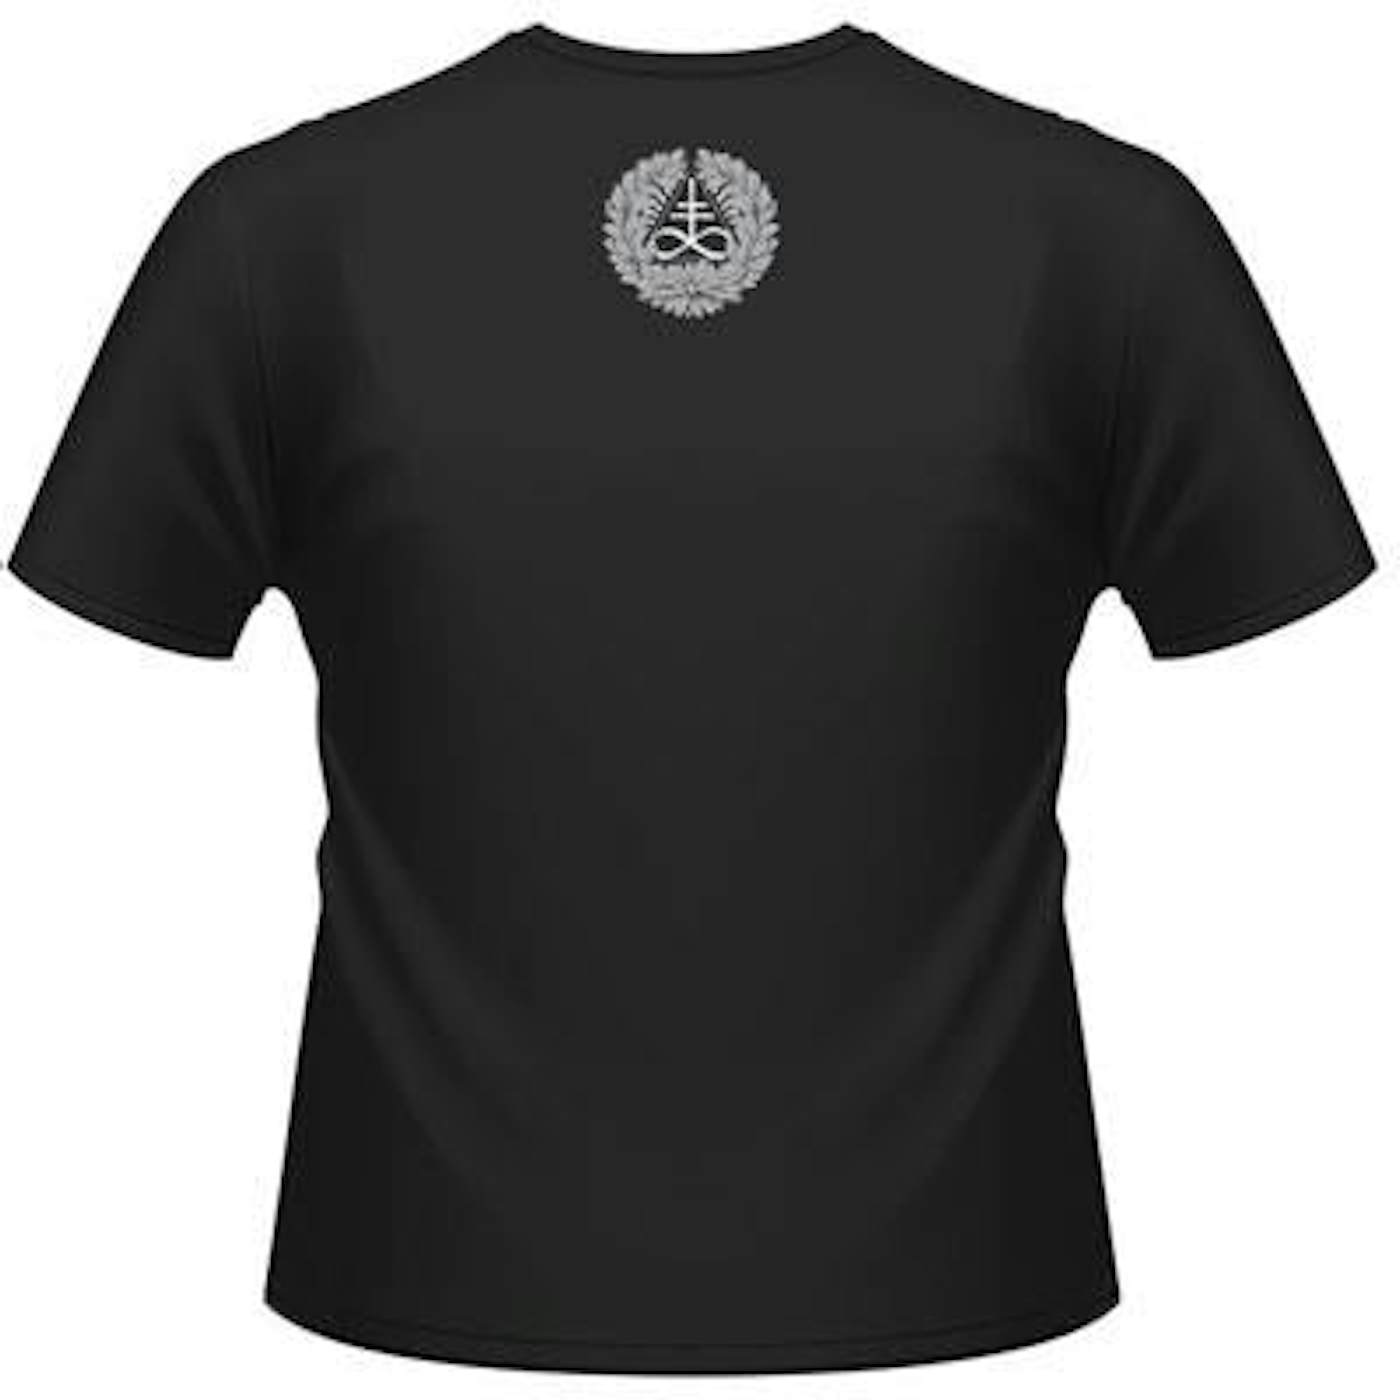 Behemoth T-Shirt - Abyssus Abyssum Invocat